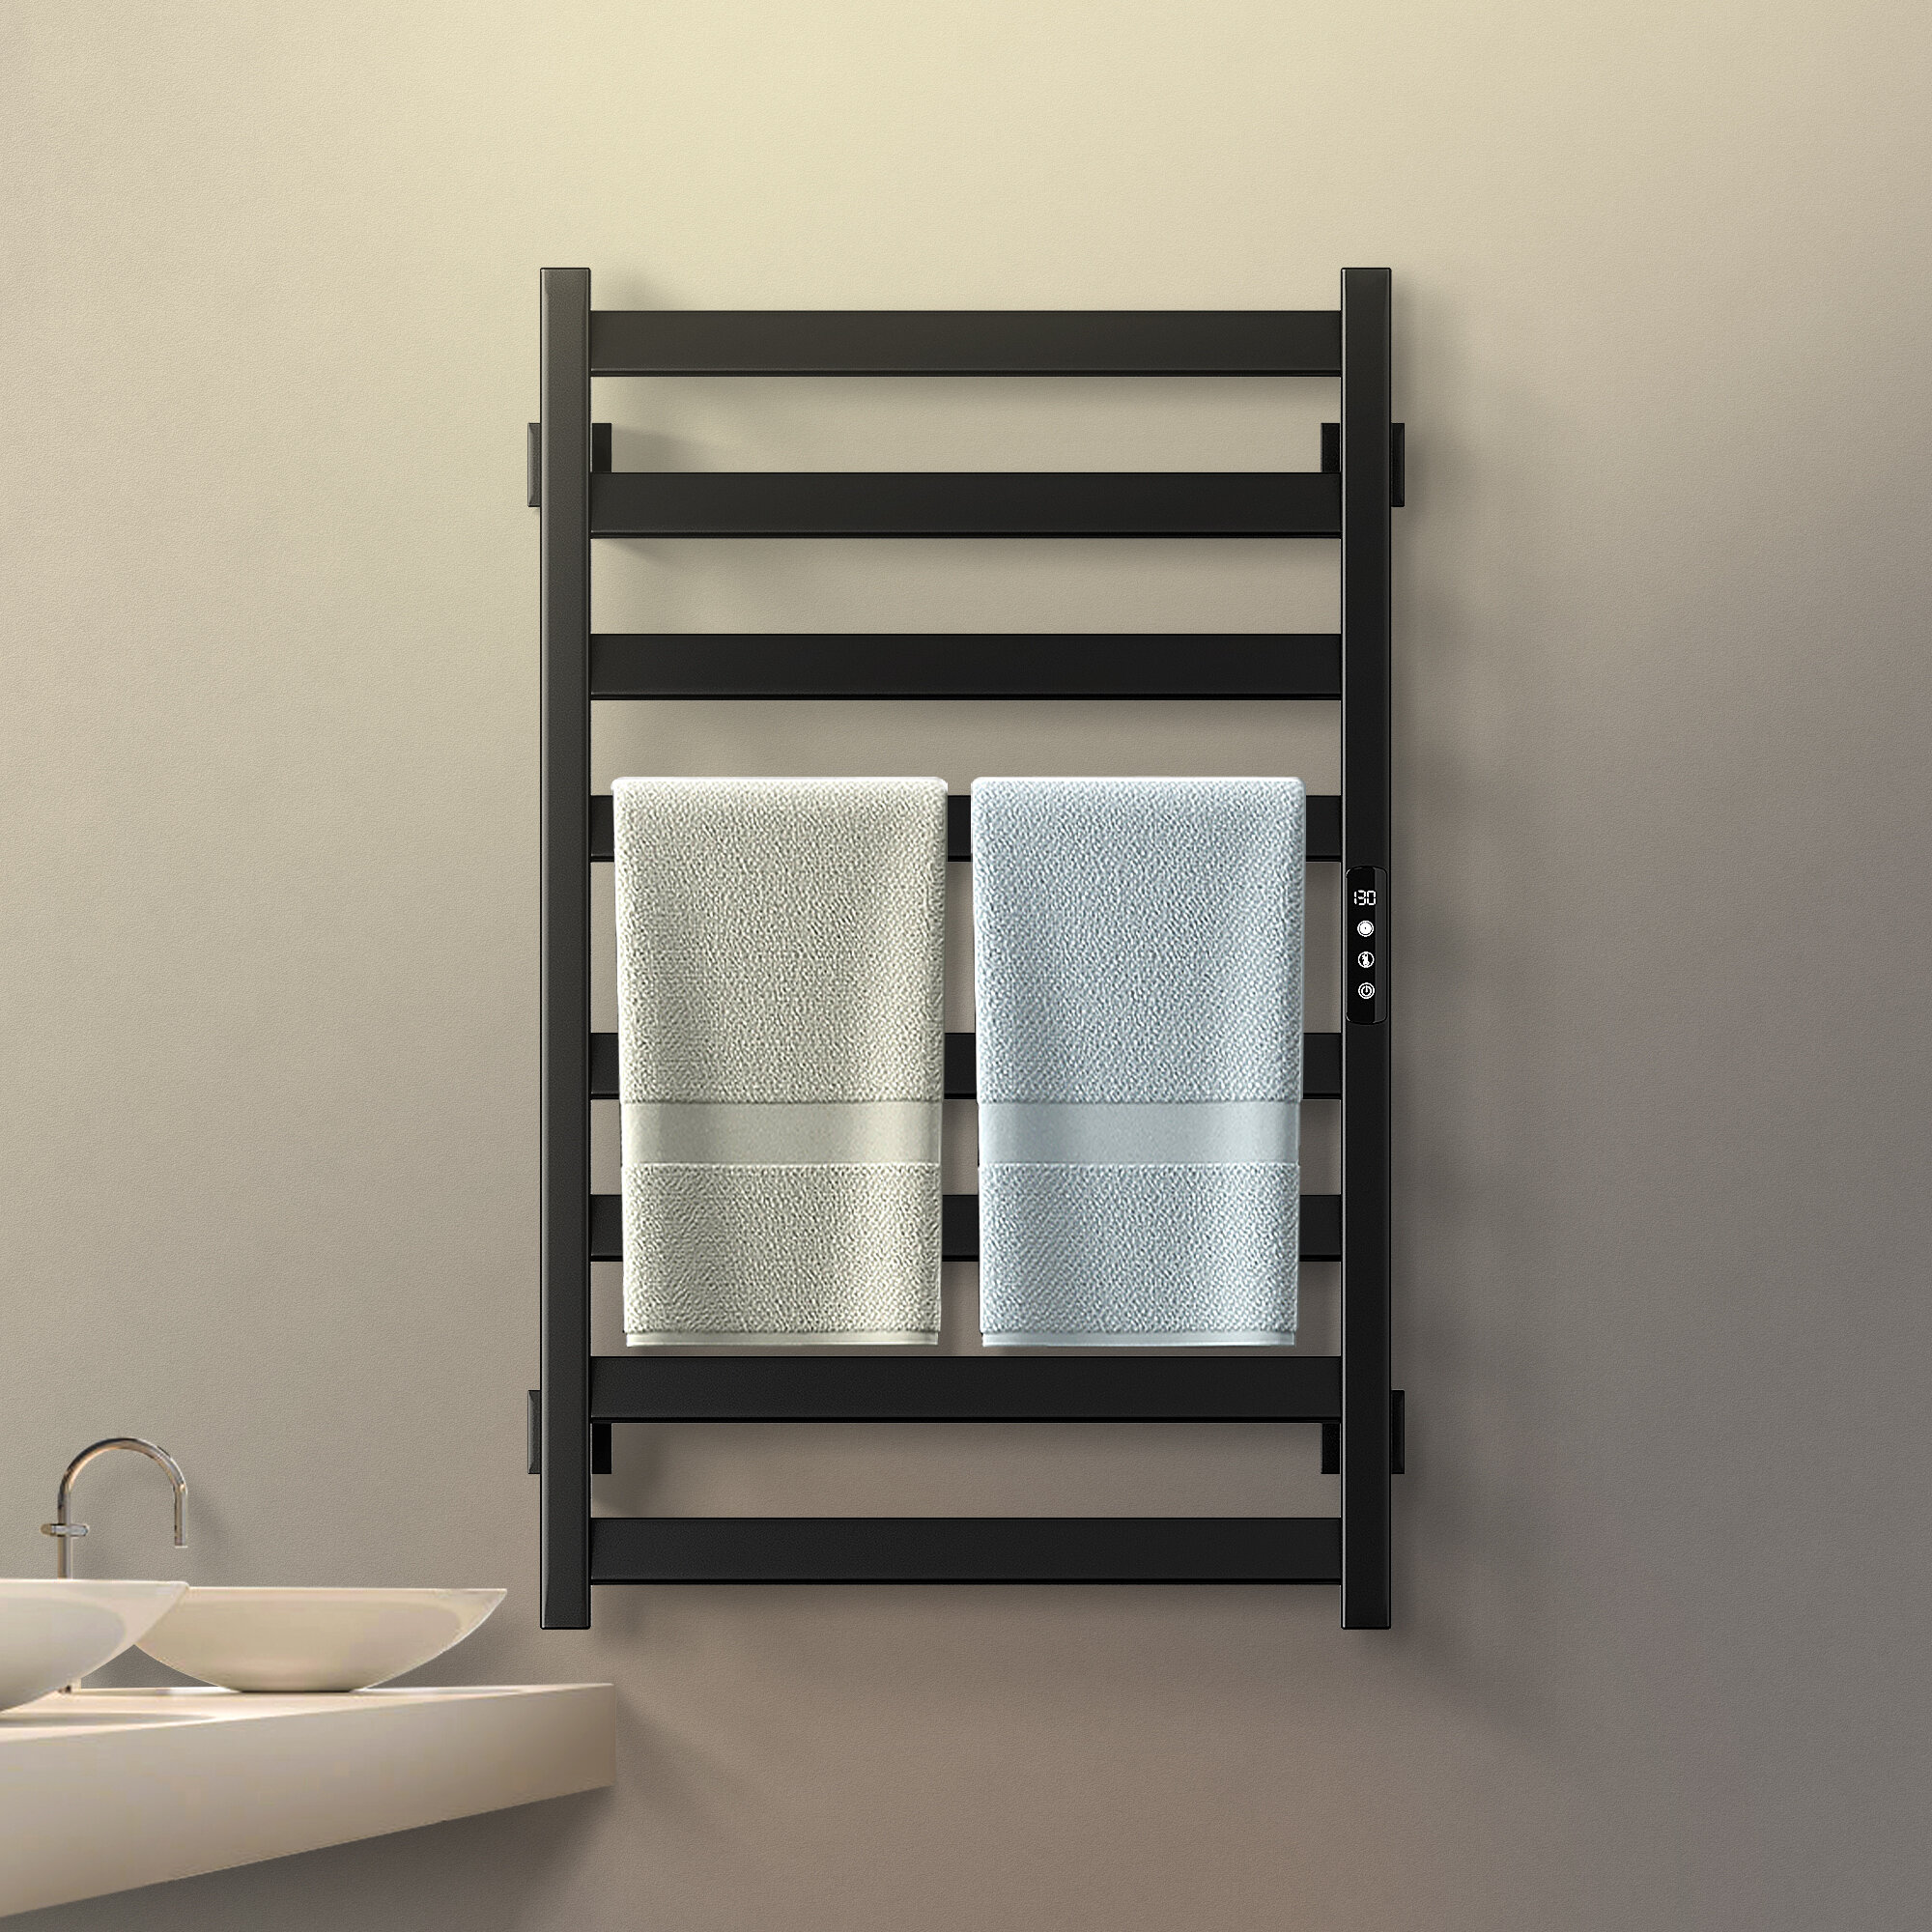 Paraheeter Wall Mounted Towel Warmer Rack for Bathrooms, Electric Heated  Towel Rack Heater, 12-Bars Stainless Steel Black.